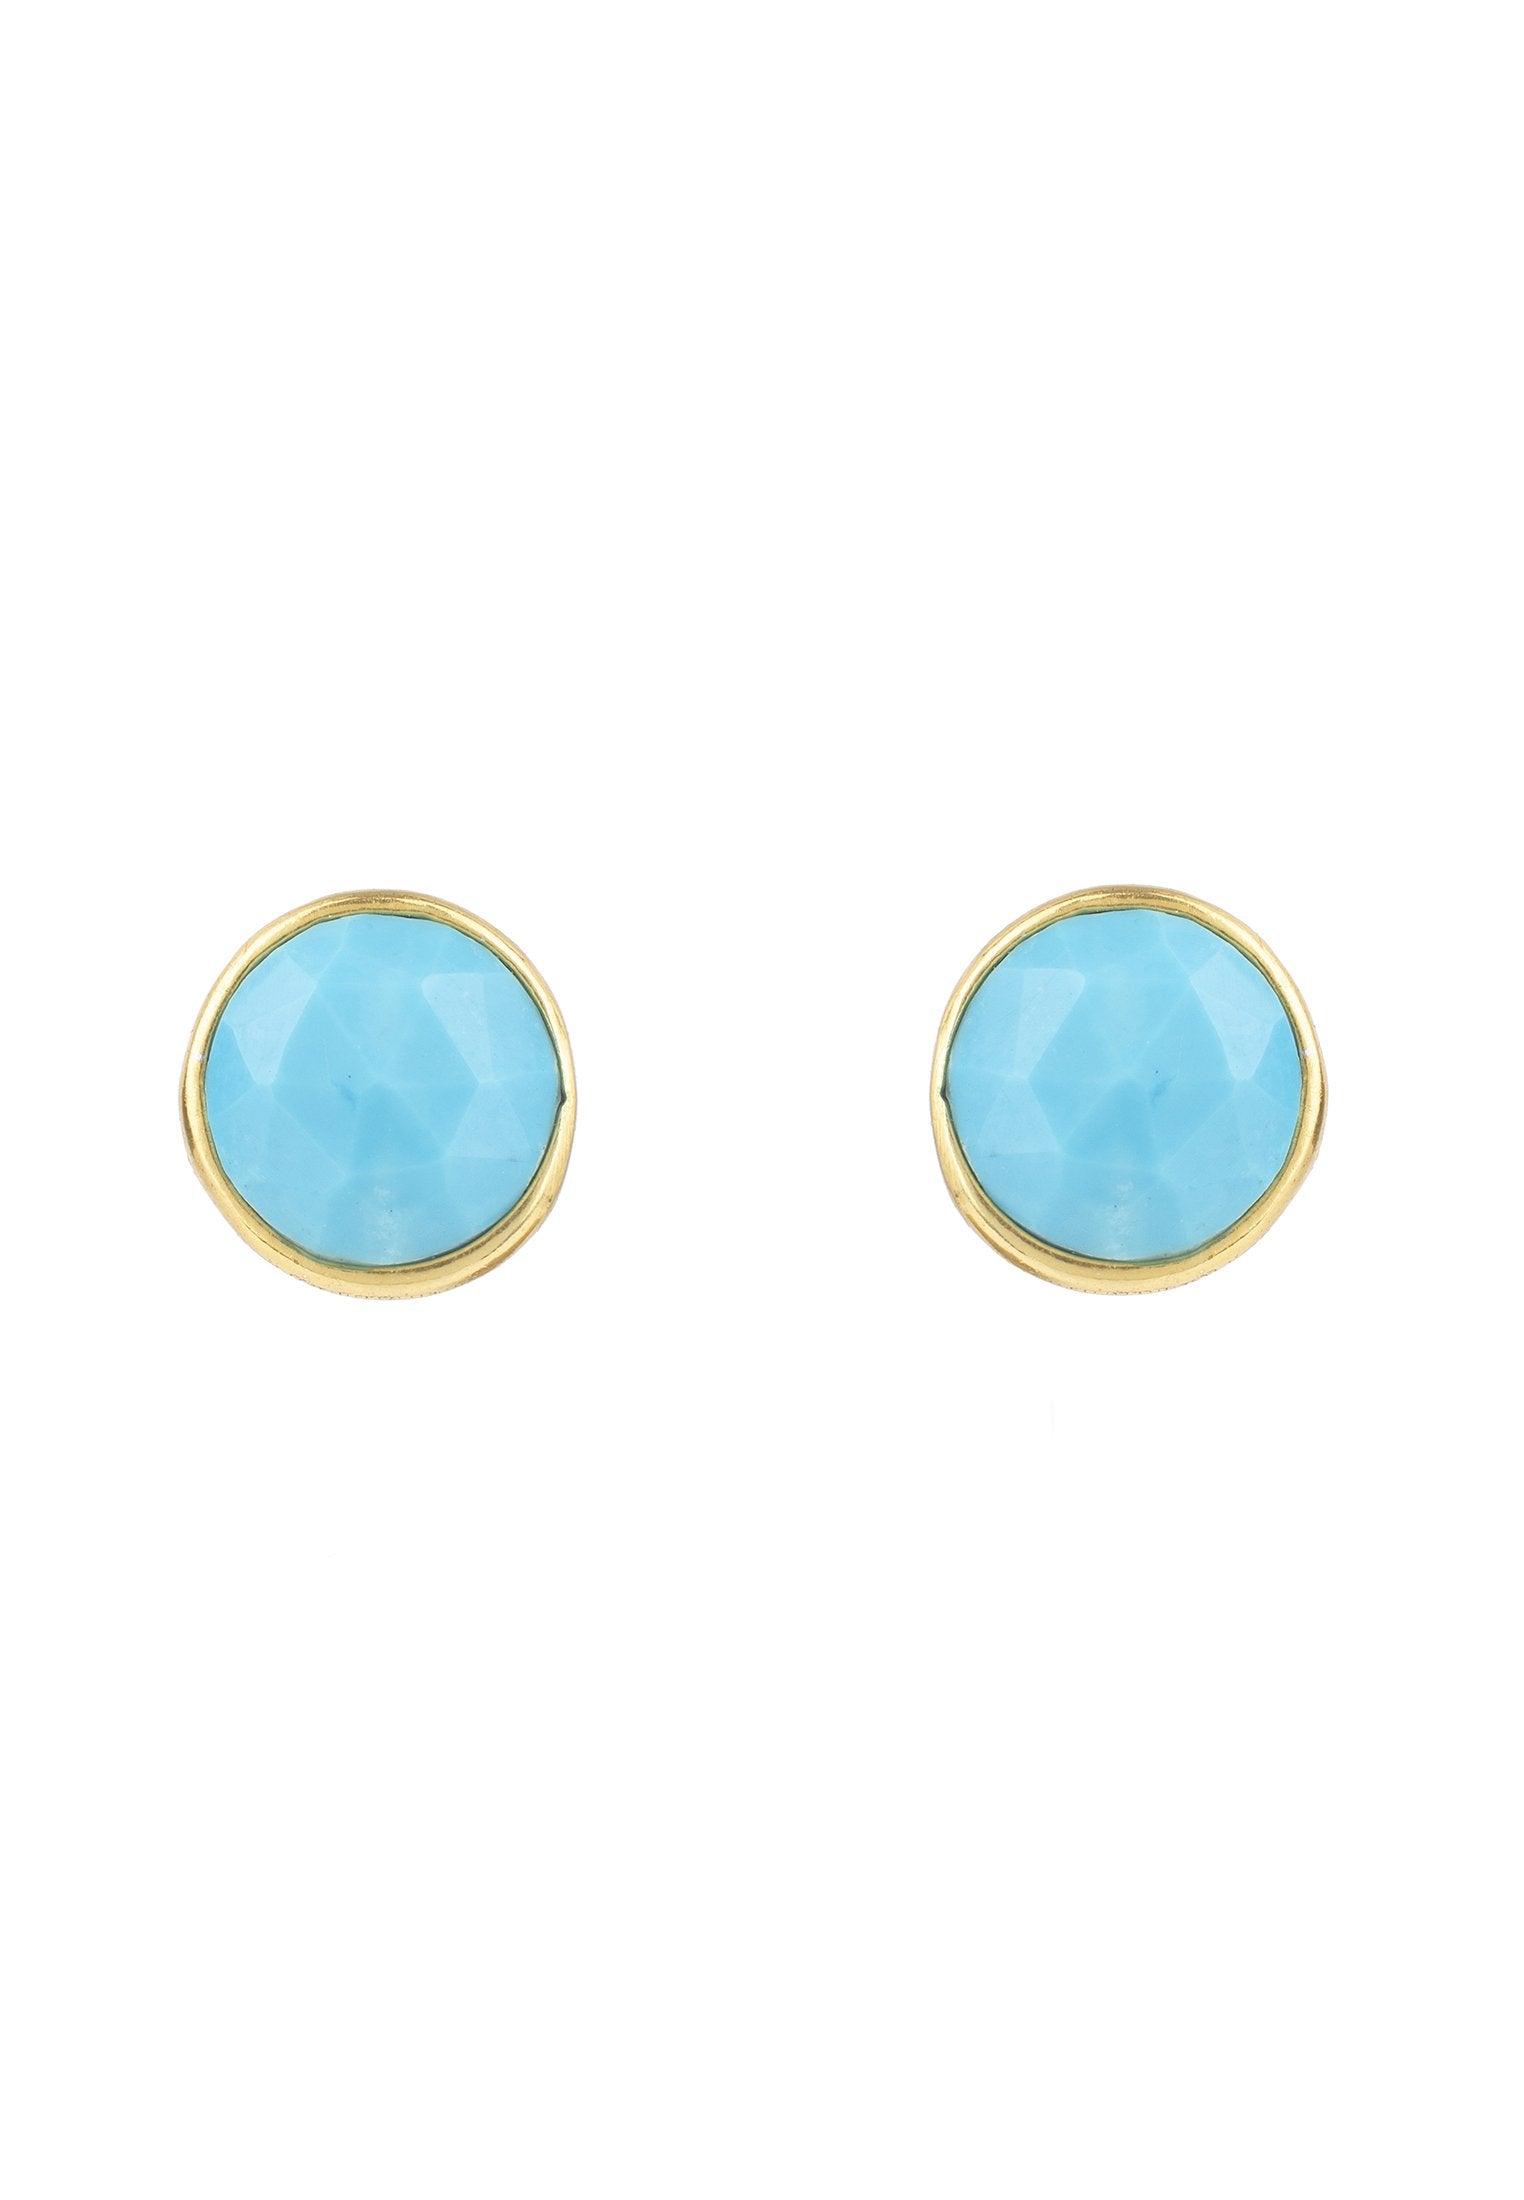 Gold Turquoise Circle Gemstone Earrings - Elegant Office Attire Finish, December Birthstone Gift - Jewelry & Watches - Bijou Her -  -  - 